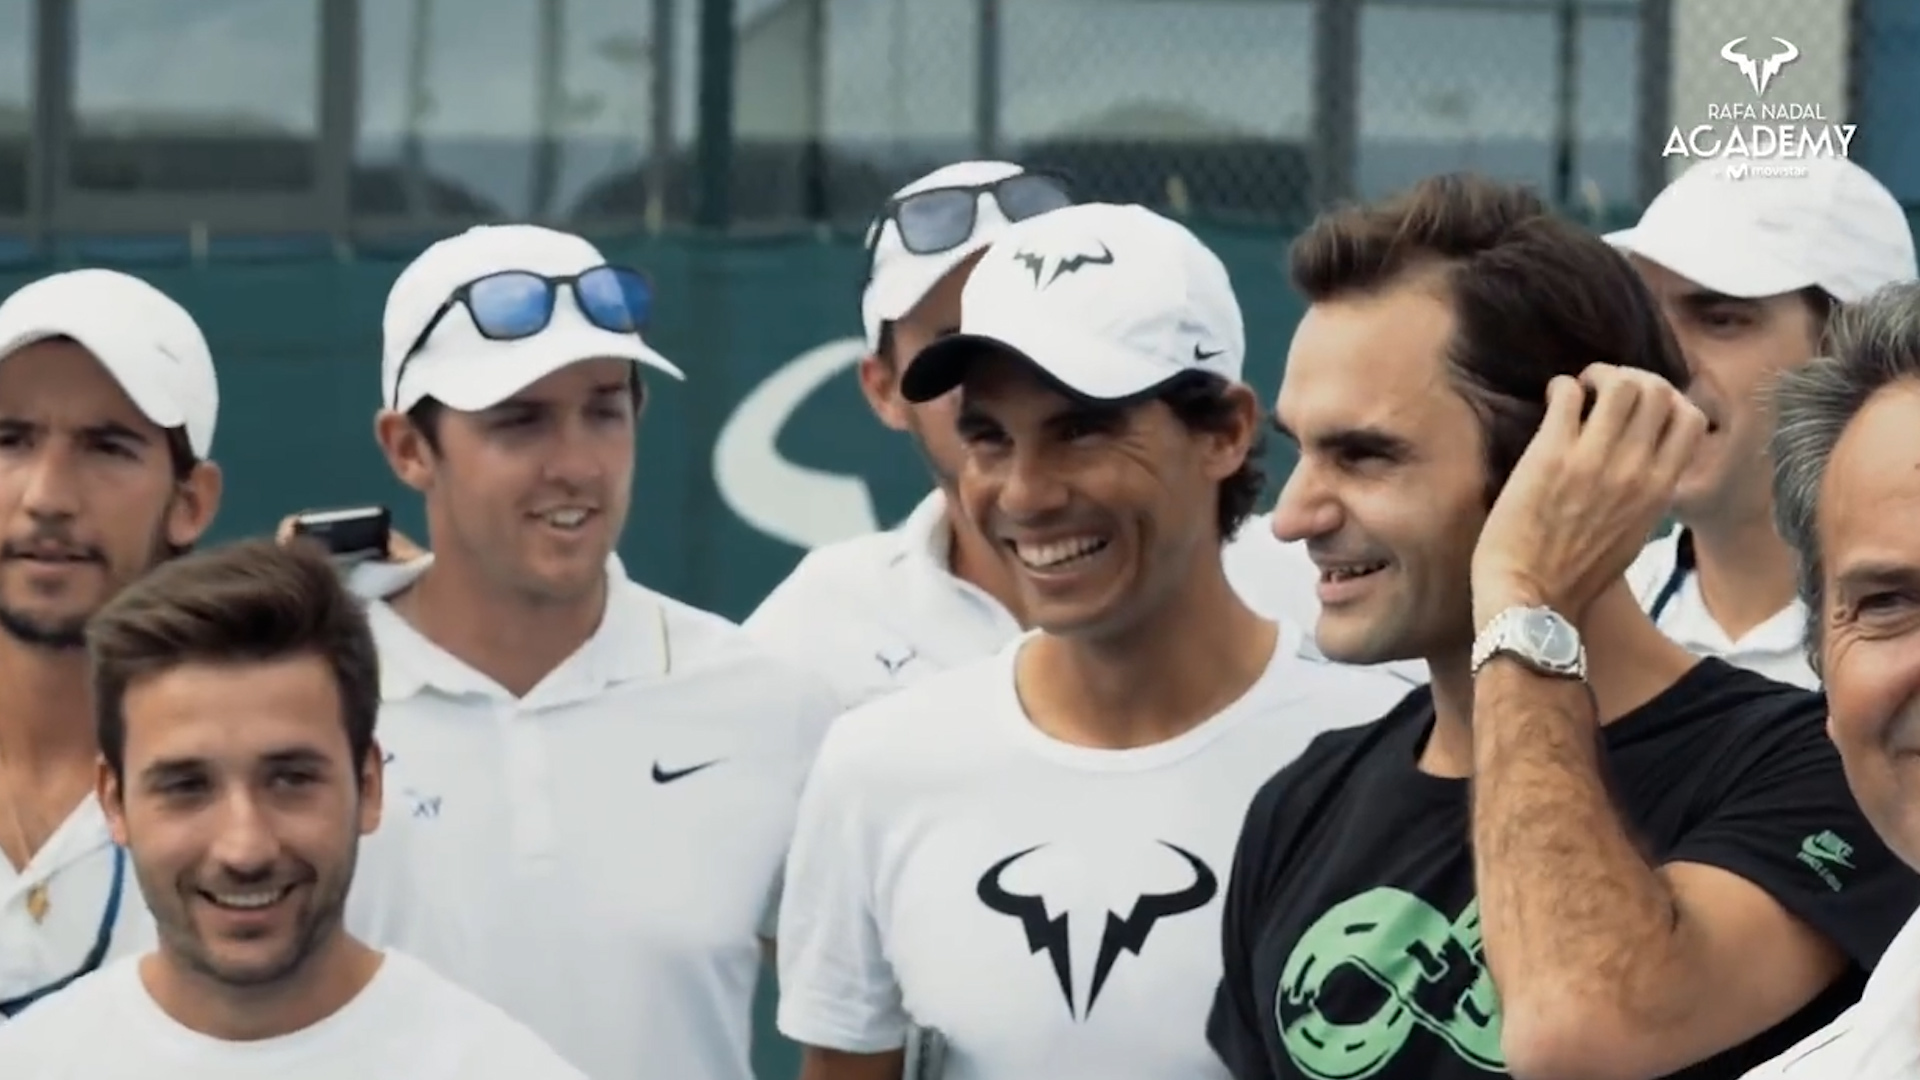 The Rafa Nadal Academys touching goodbye to Roger Federer